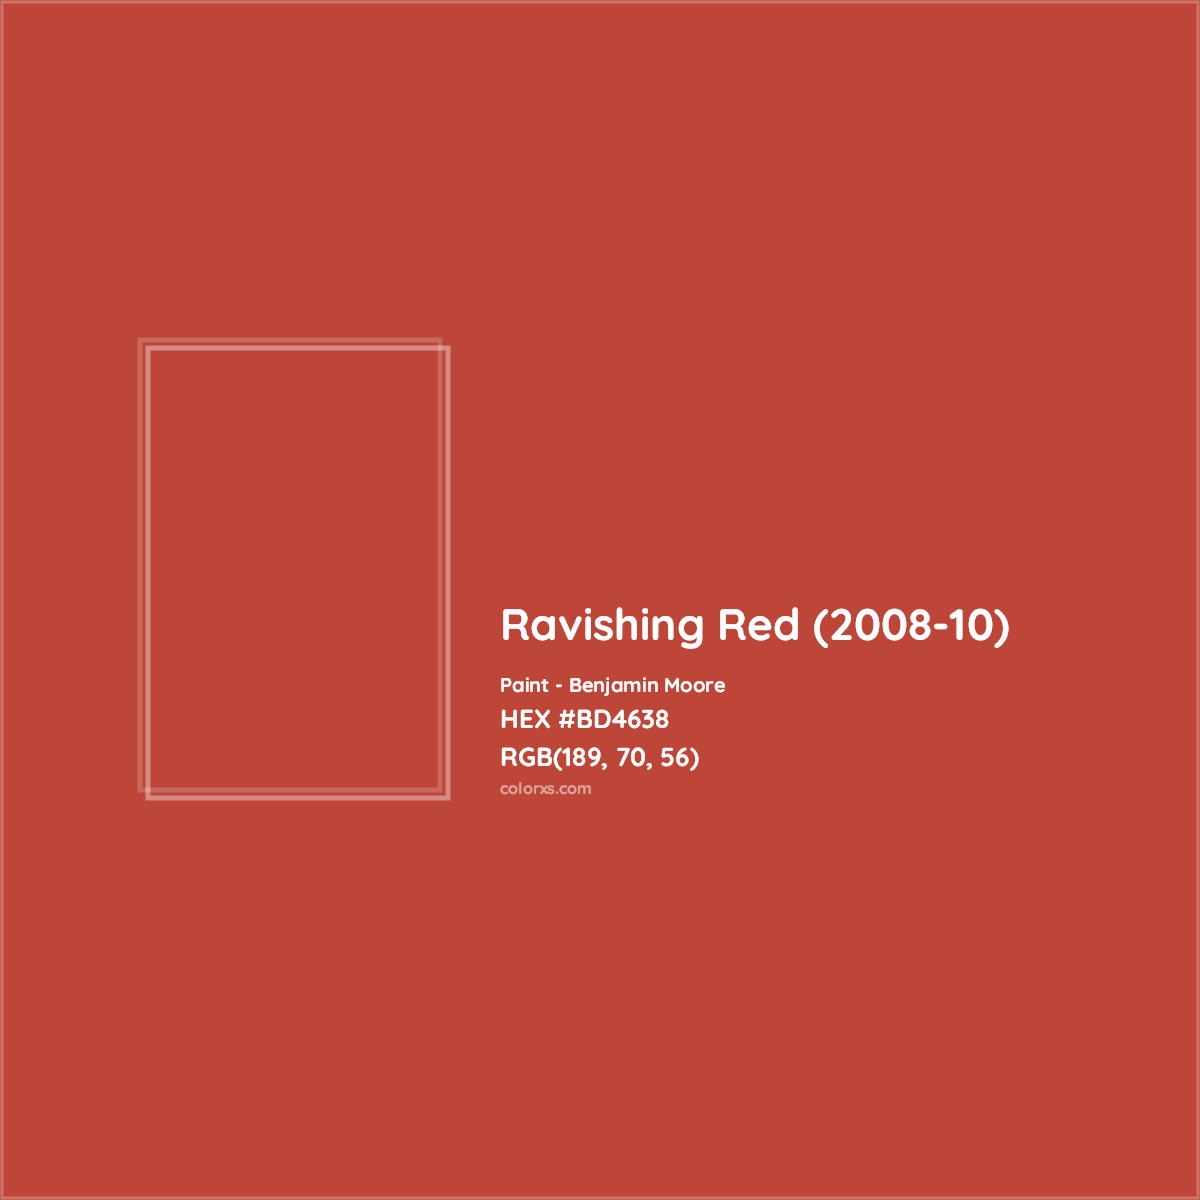 HEX #BD4638 Ravishing Red (2008-10) Paint Benjamin Moore - Color Code